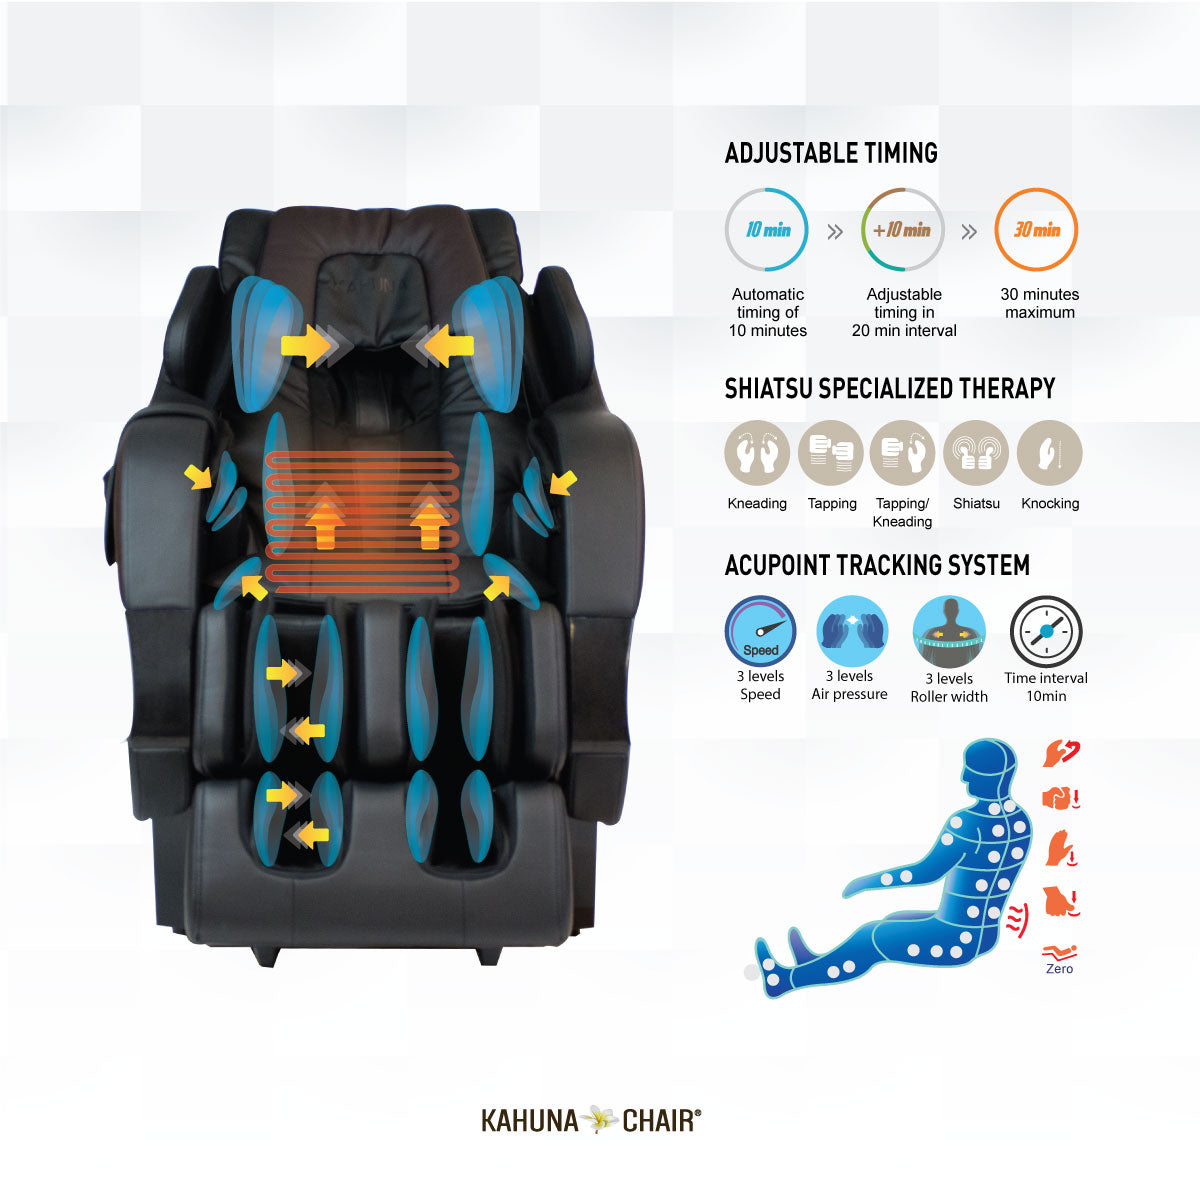 Kahuna SM-7300 Massage Chair Adjustable Features